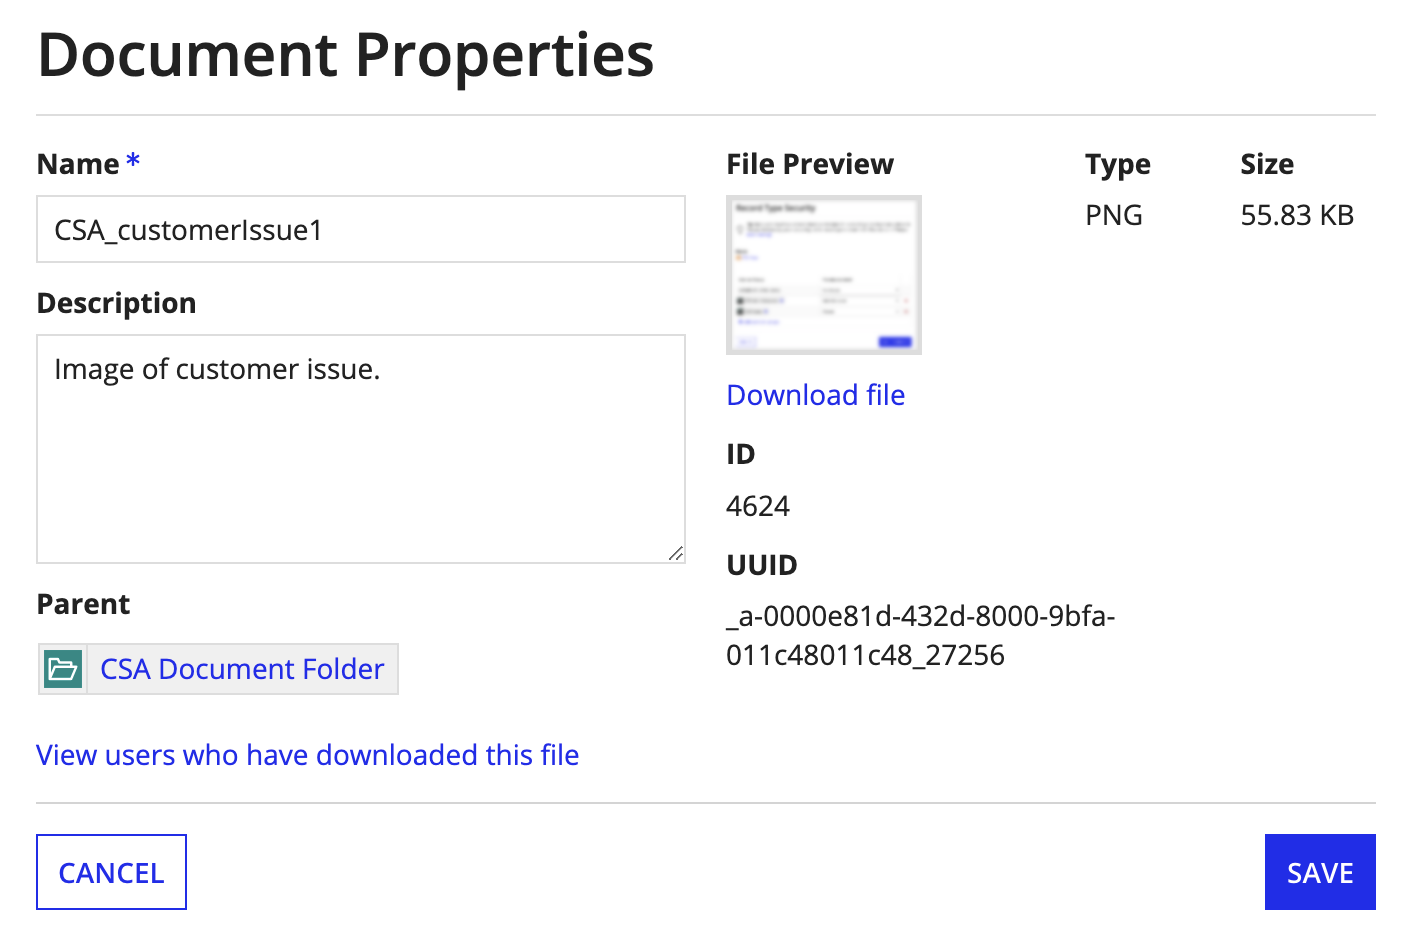 /FoldersAndDocuments ViewDocumentProperties